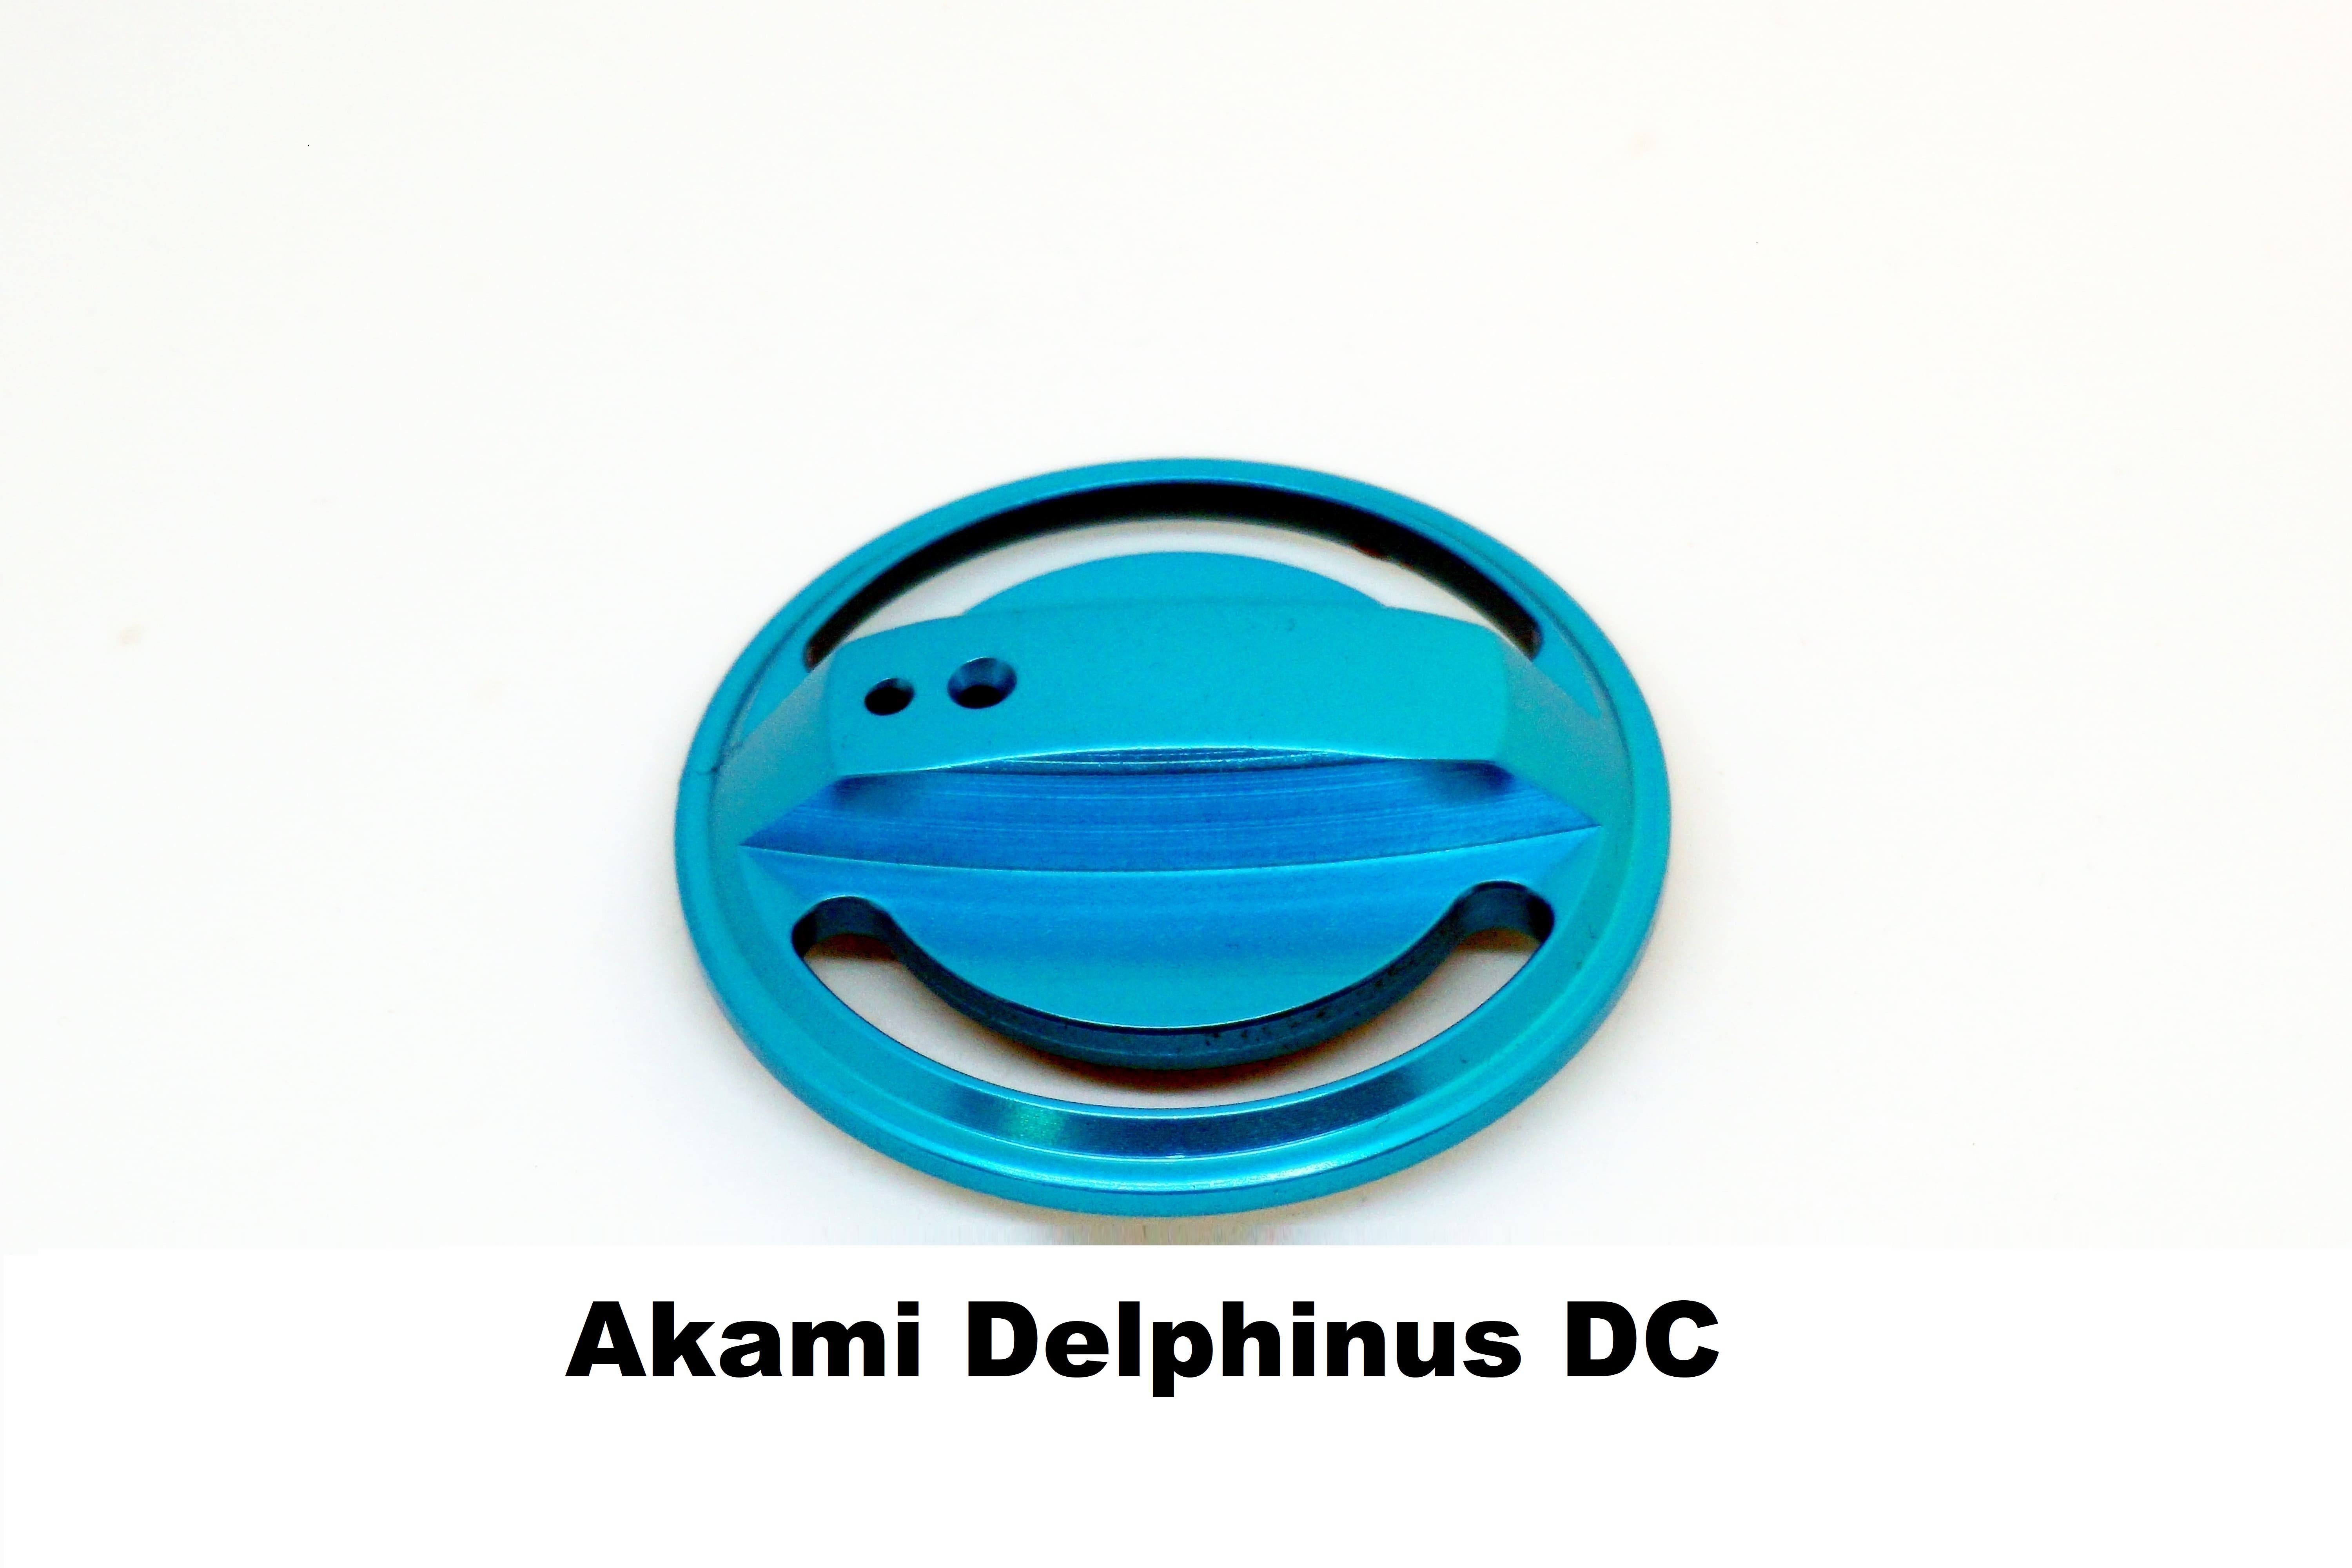 Drag Knob for Akami Delphinus DC